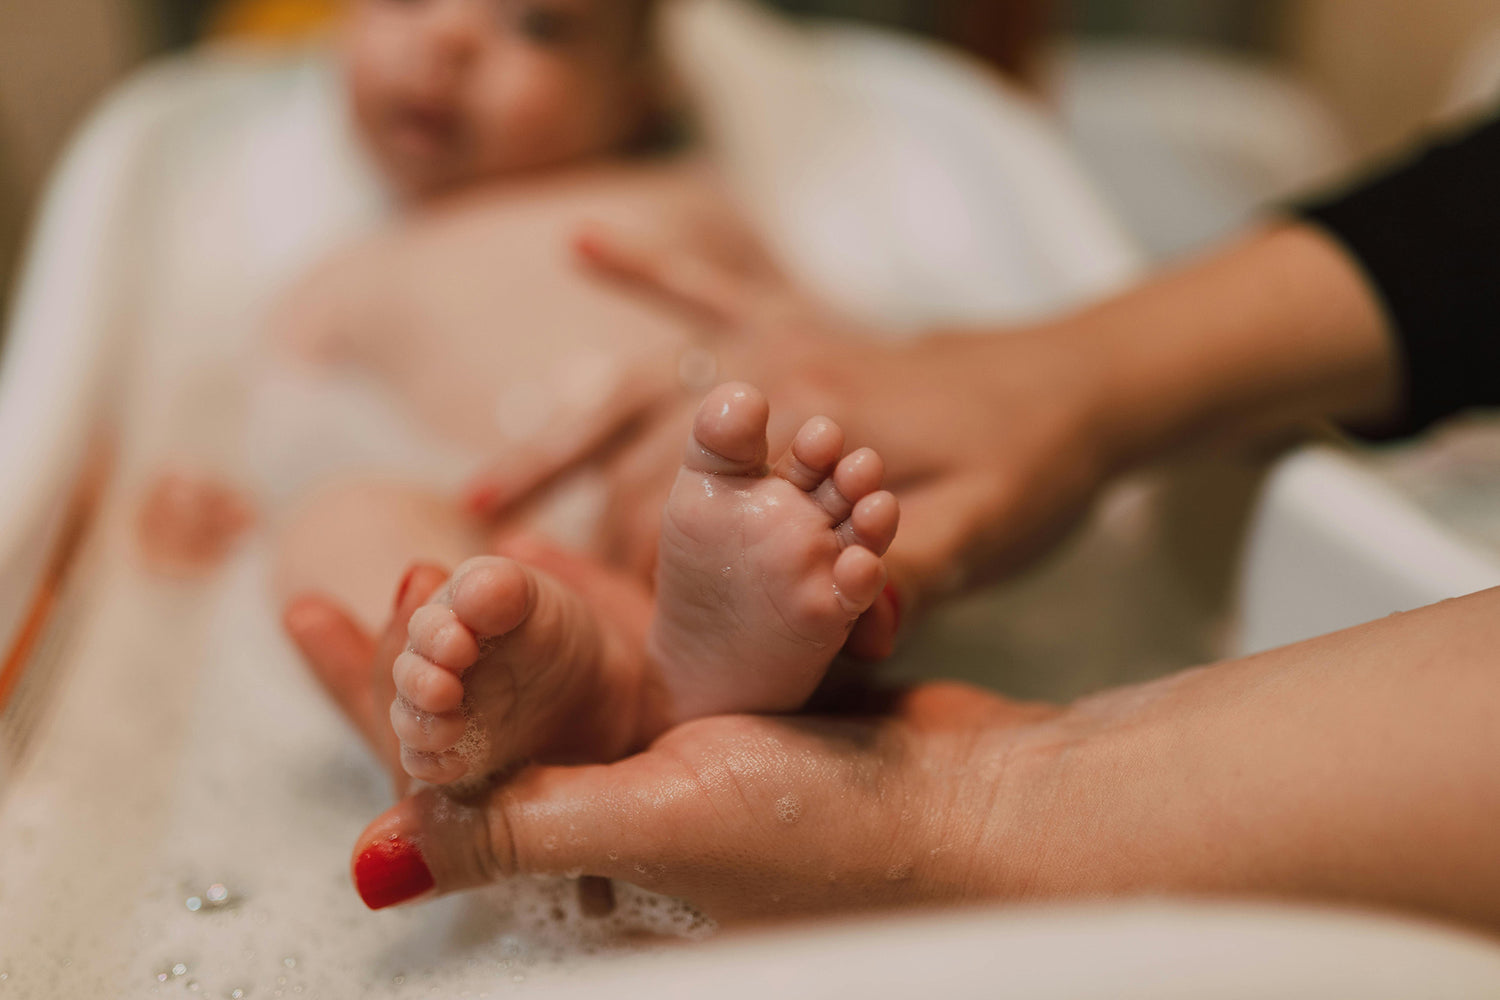 5 Creative Ways to Make Baby Bath Time Easier